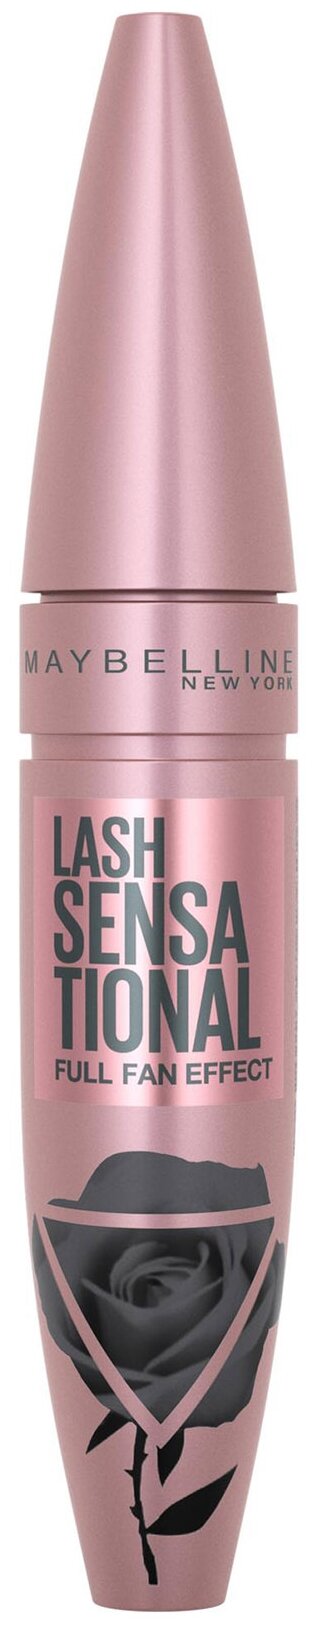 Maybelline New York    Lash Sensational,  